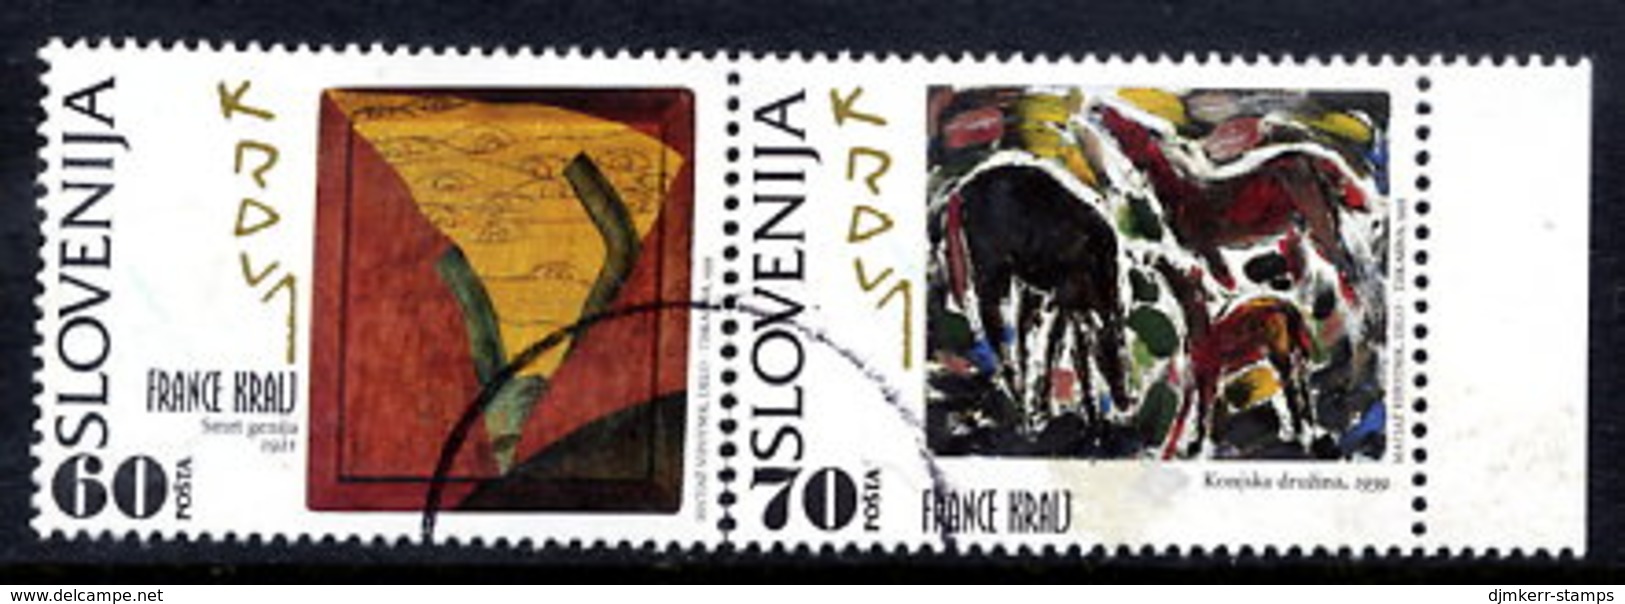 SLOVENIA 1995 France Kralj Centenary Pair.used.  Michel 121-22 - Slovenië